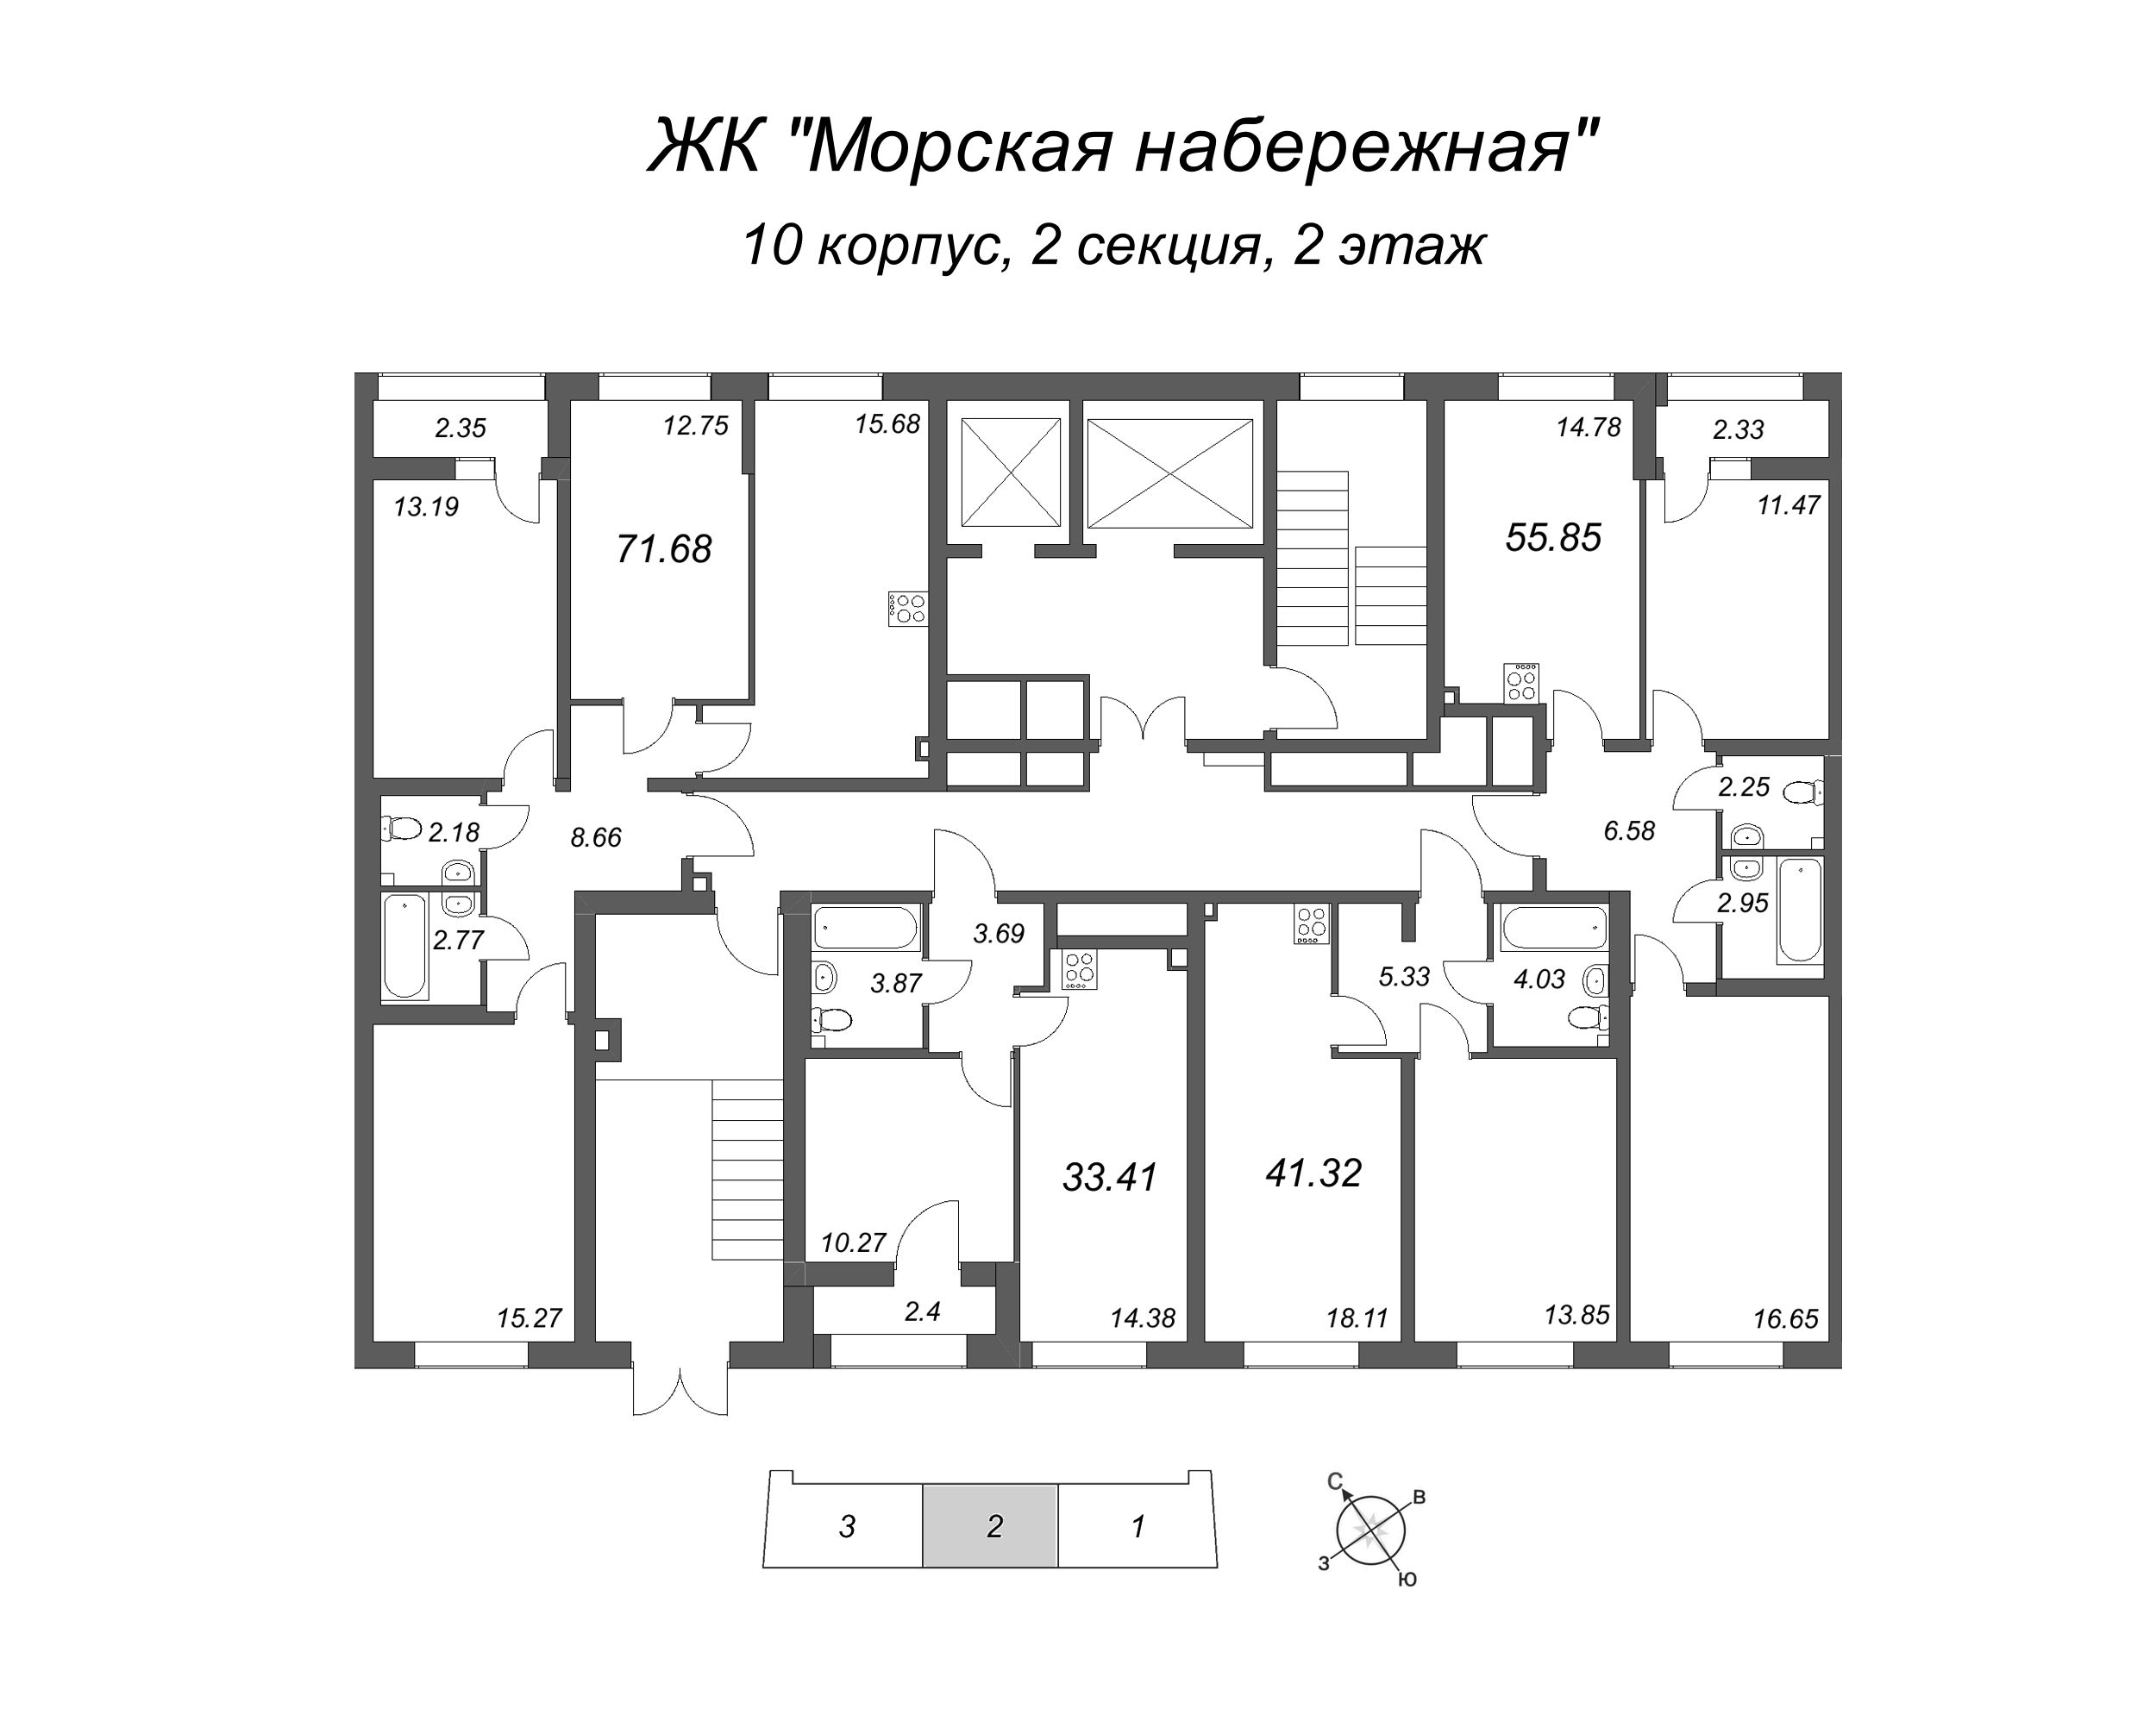 4-комнатная (Евро) квартира, 71.68 м² - планировка этажа